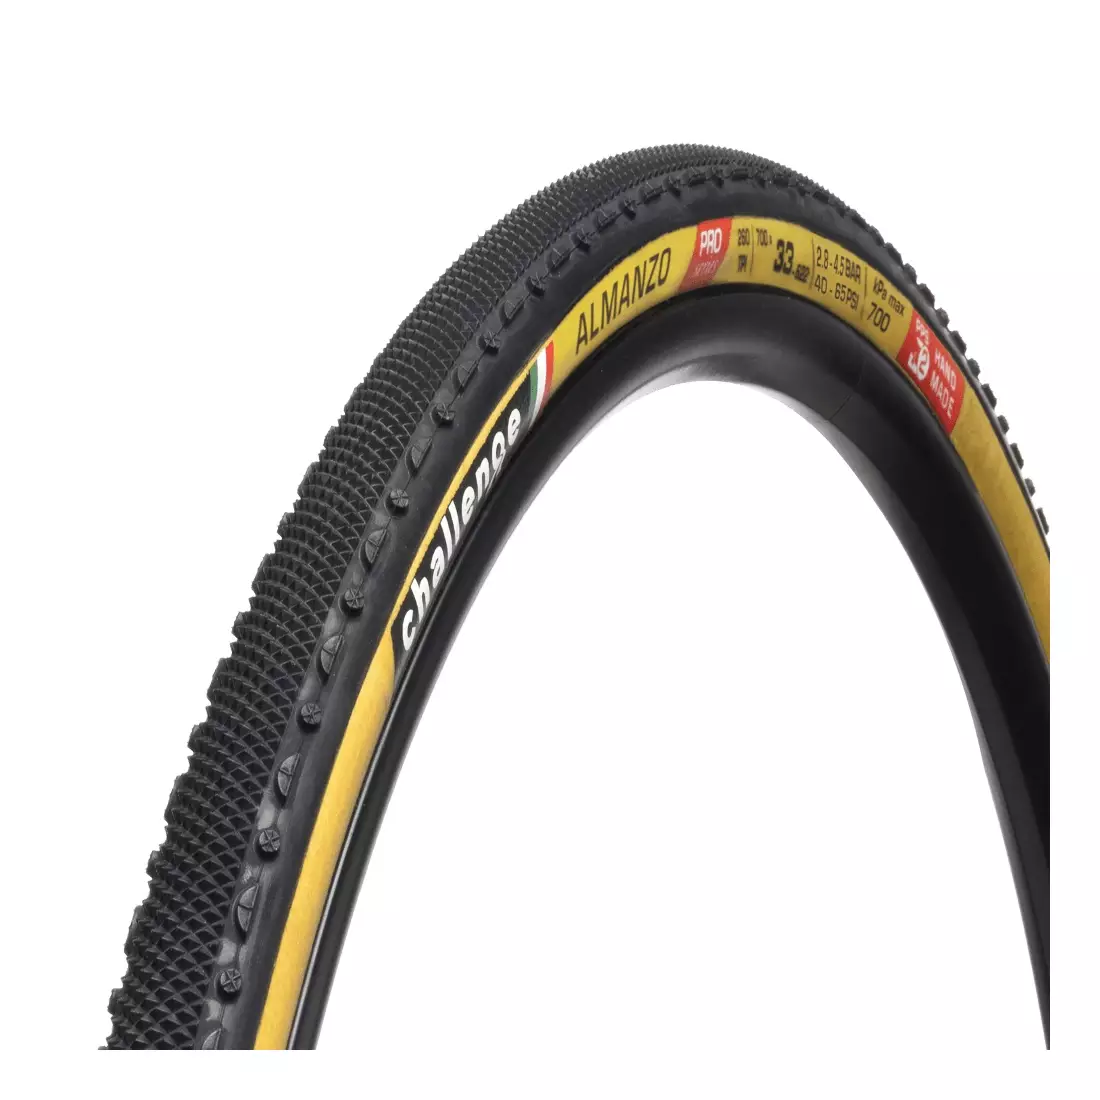 CHALLENGE ALMANZO gravel bike tire 28&quot; (700x33c) 260 TPI, black and cream